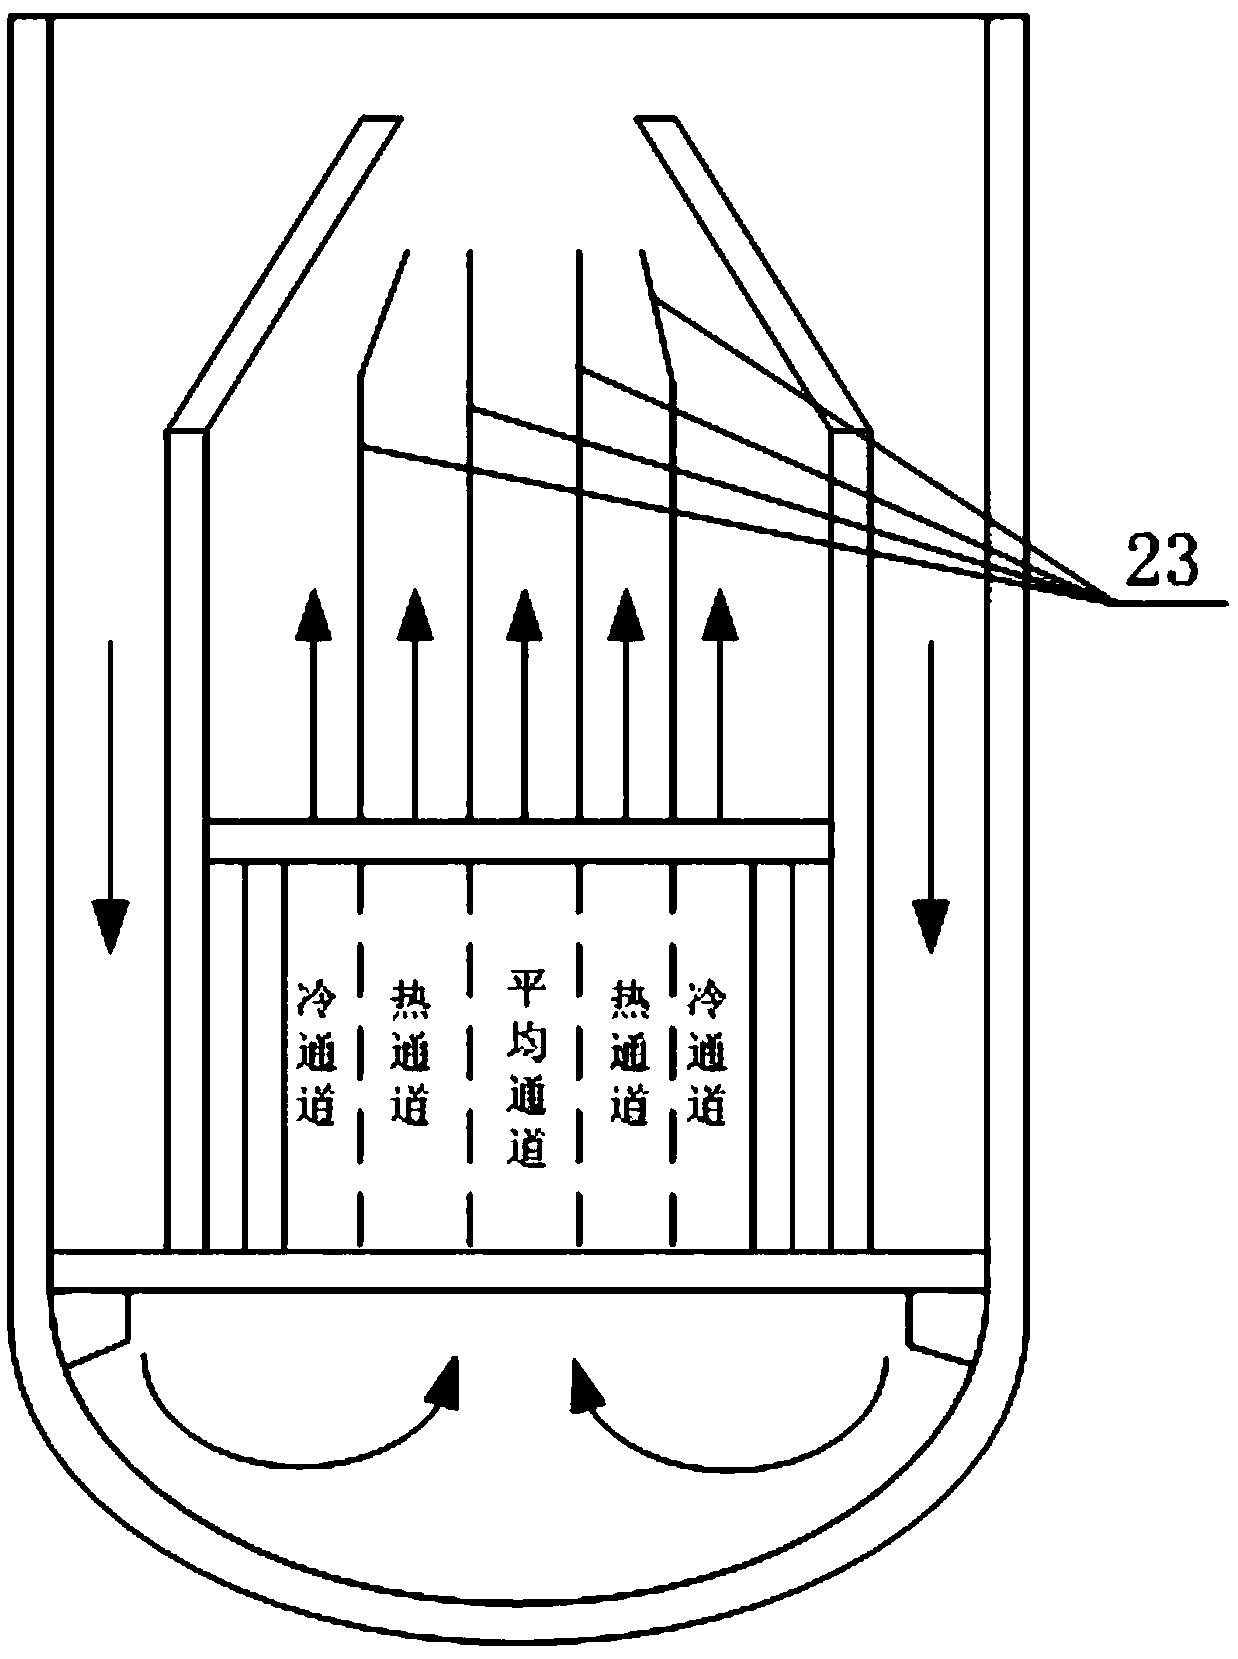 All natural circulation-type modular small reactor